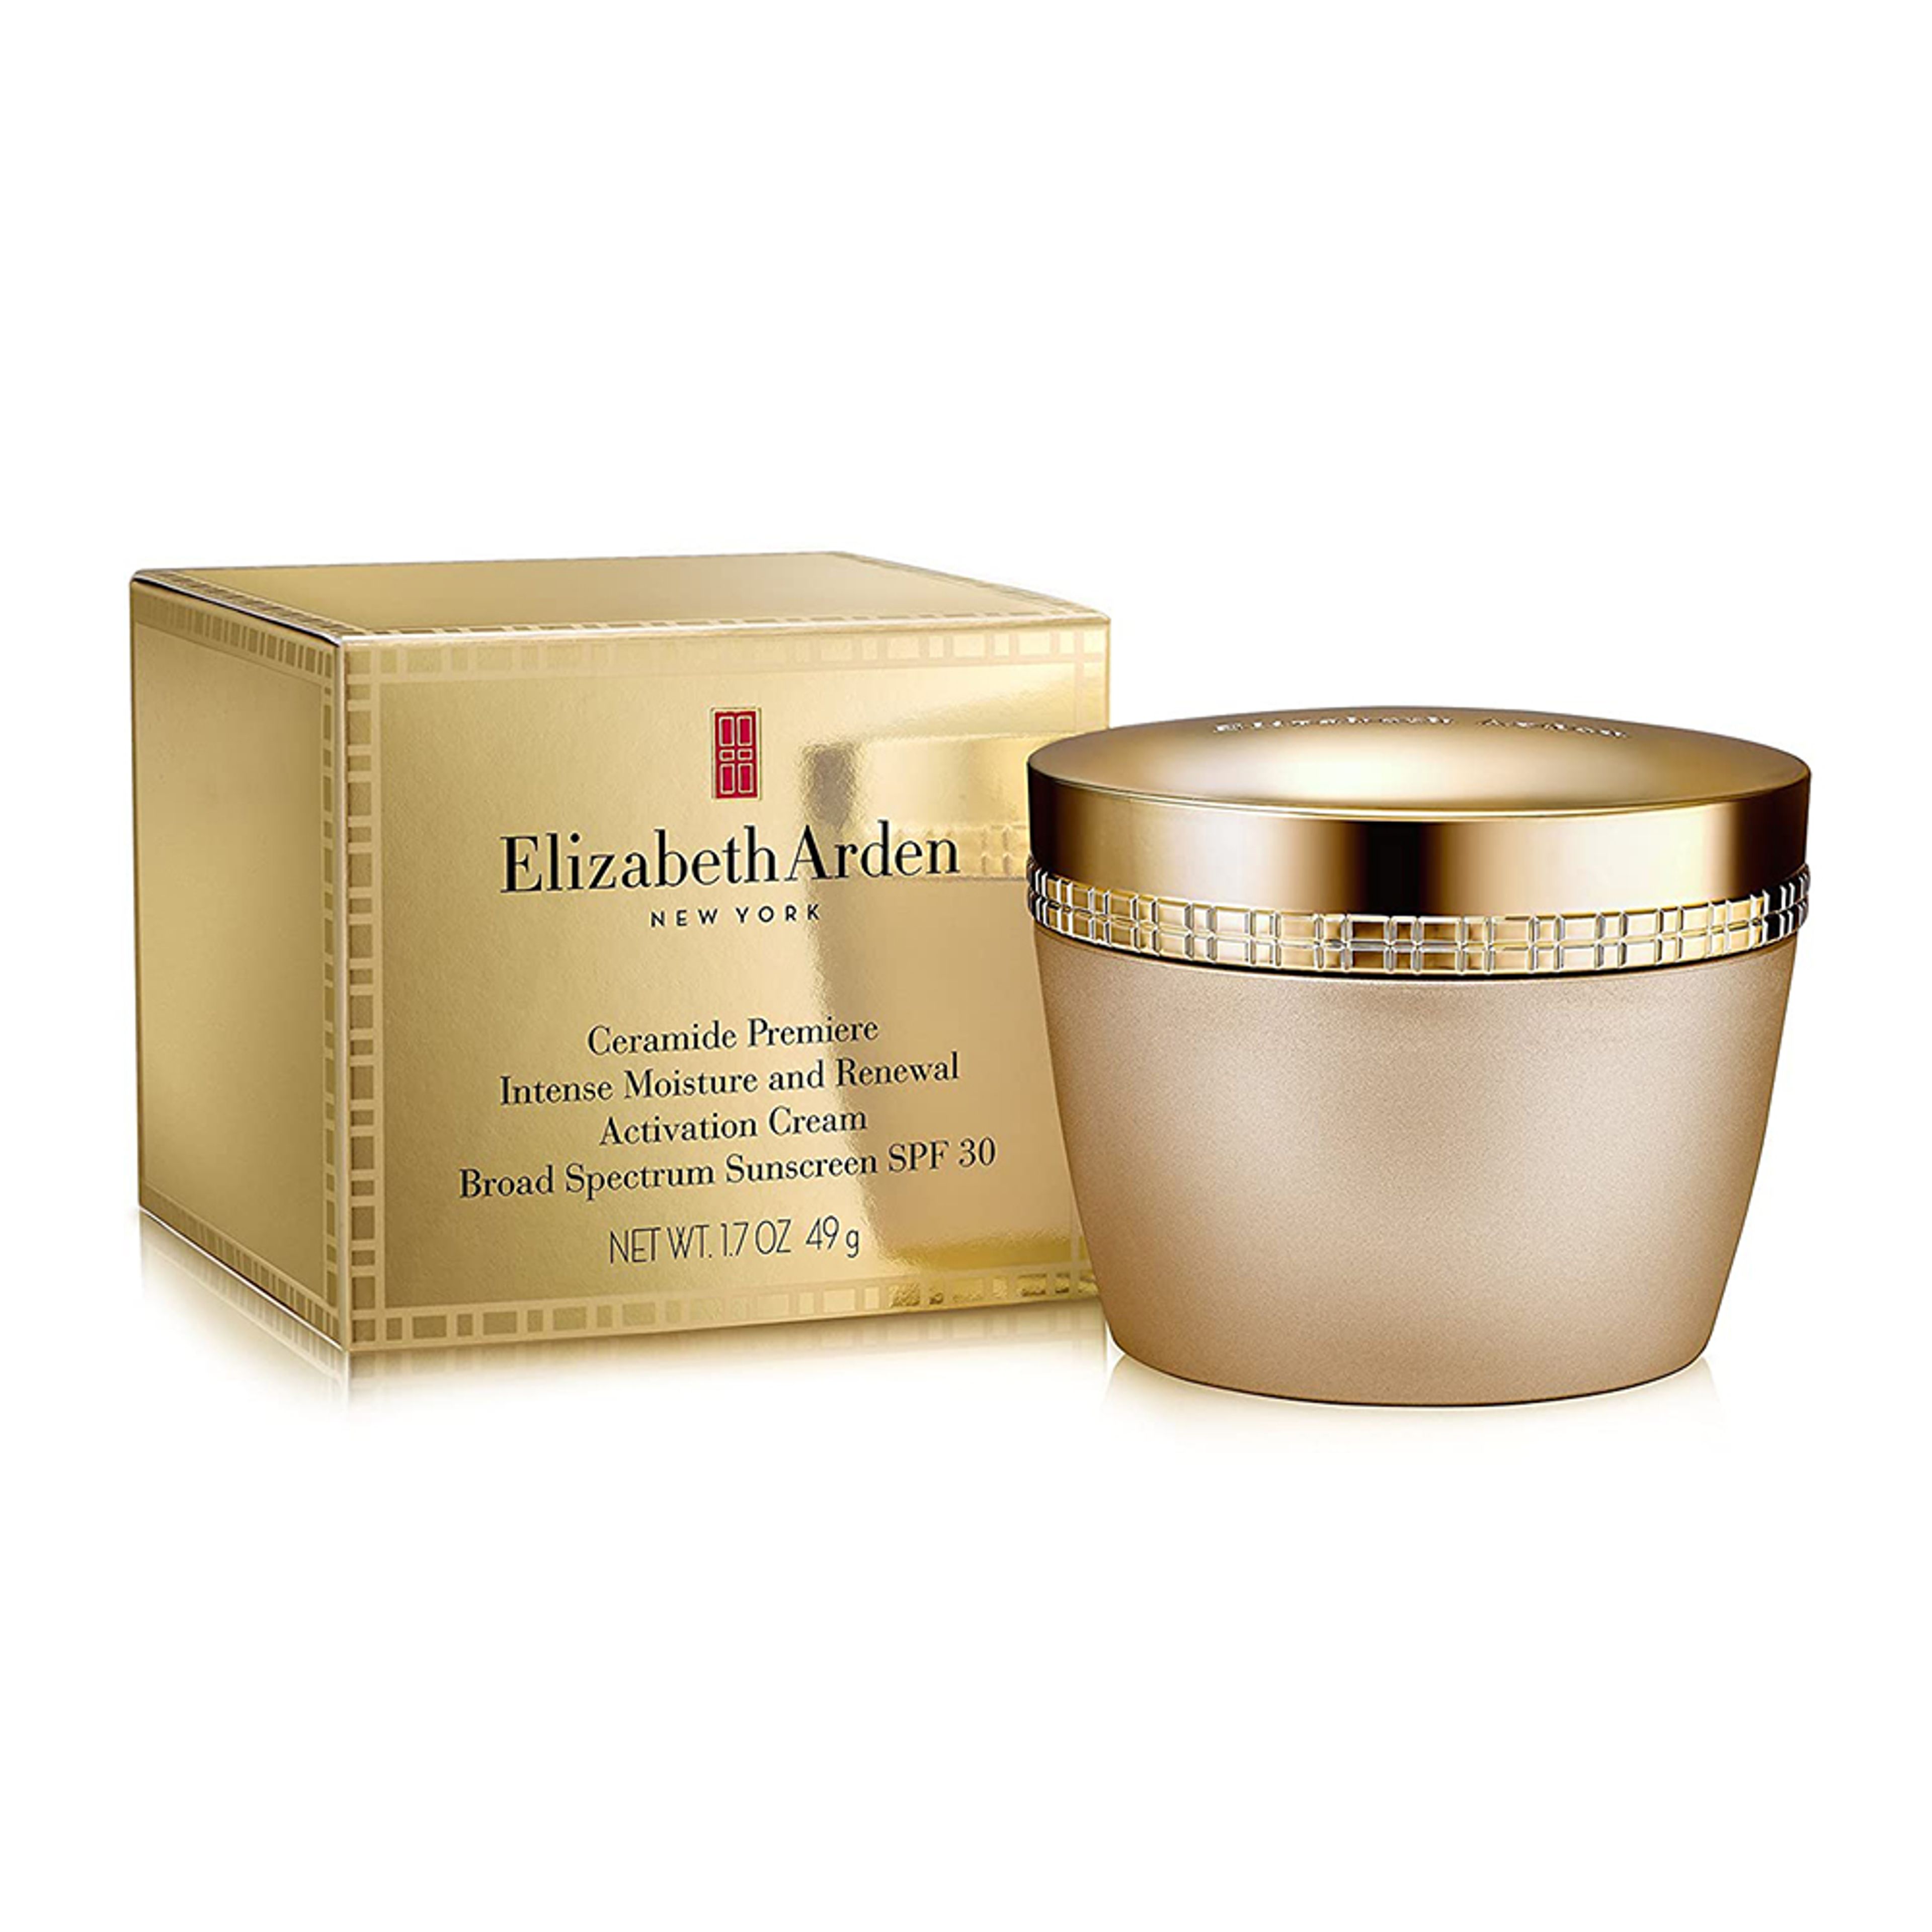 Elizabeth Arden Ceramide Premier Intense Moisture And Renewal Activation Cream Broad Spectrum Sunscreen Spf 30 1